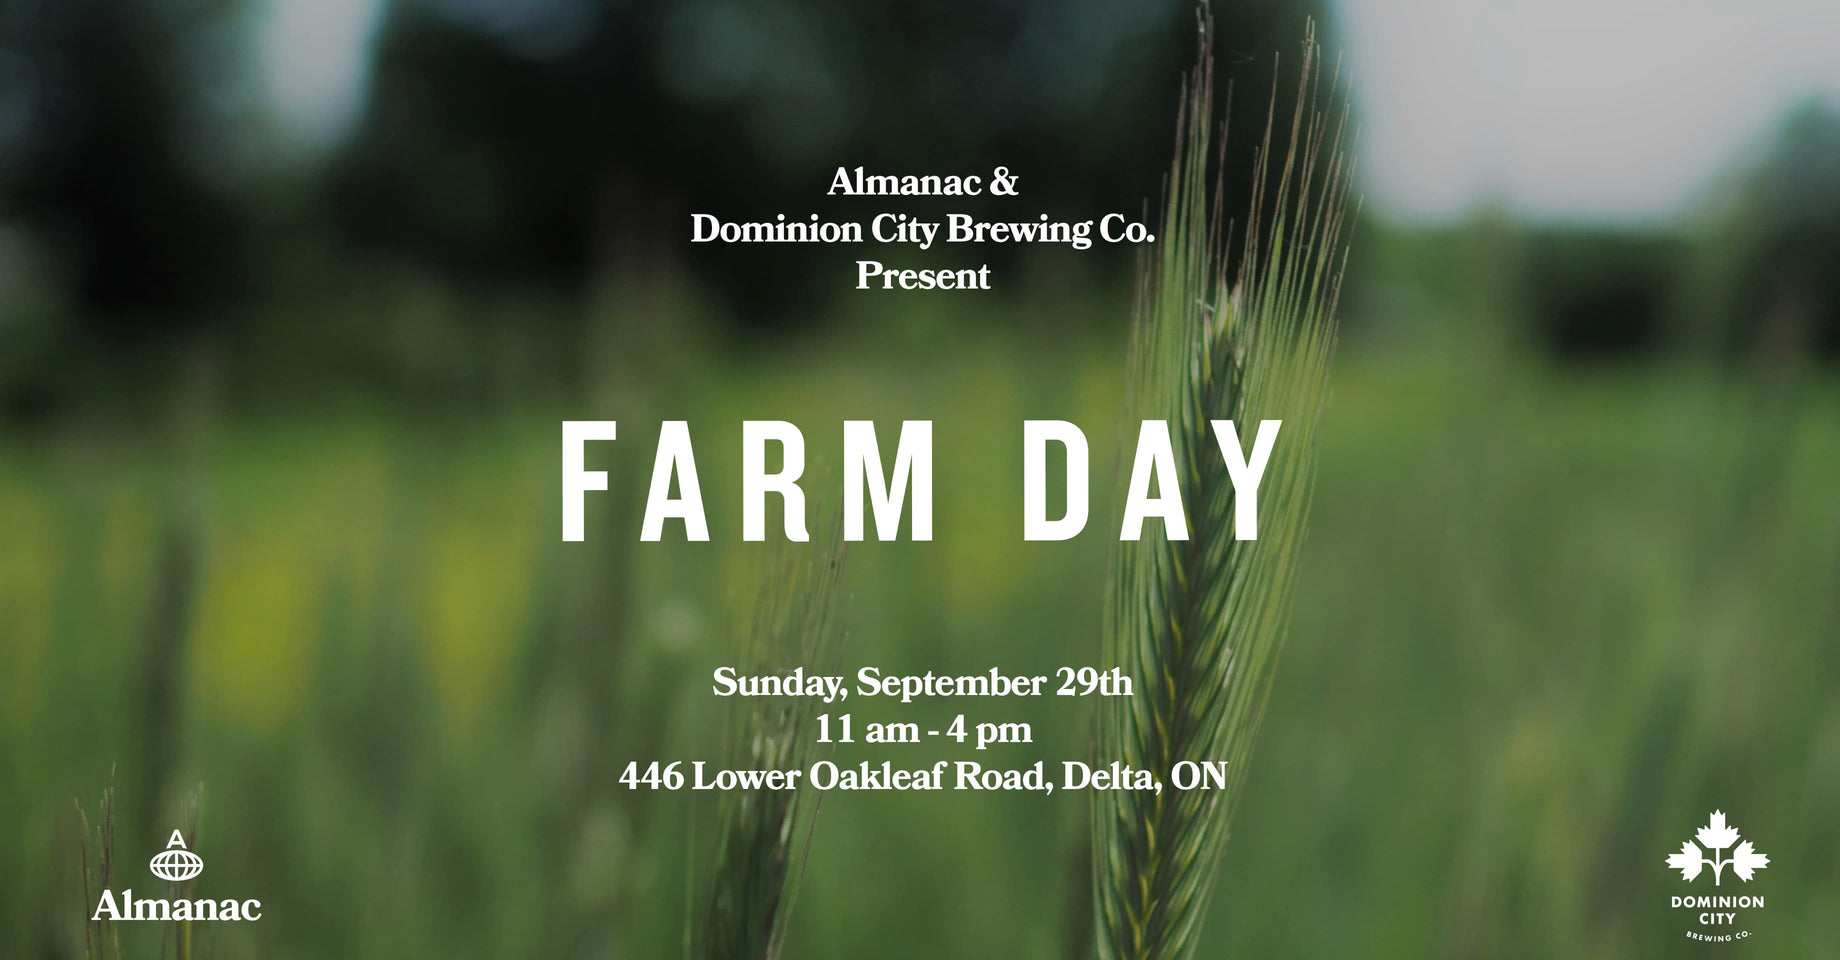 Join us for Farm Day on Sunday September 29